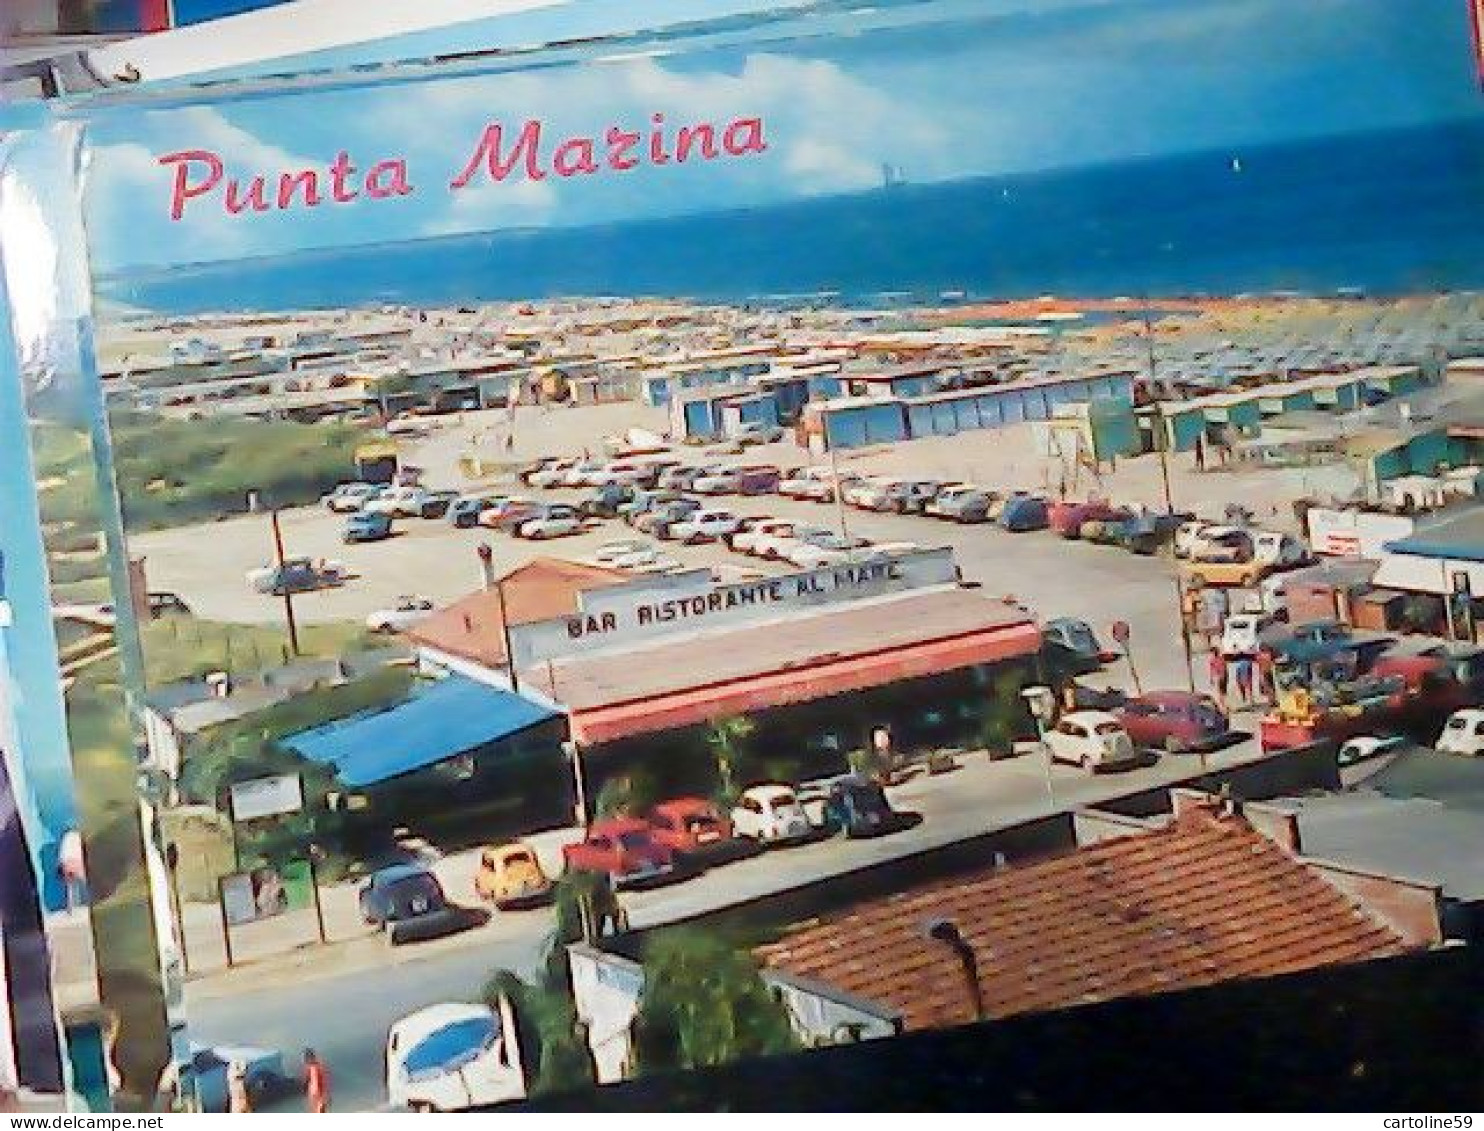 3 CARD MARINA  ROMEA - MARINA DI RAVENNA E PUNTA  VB1967/78  JT6045 - Faenza